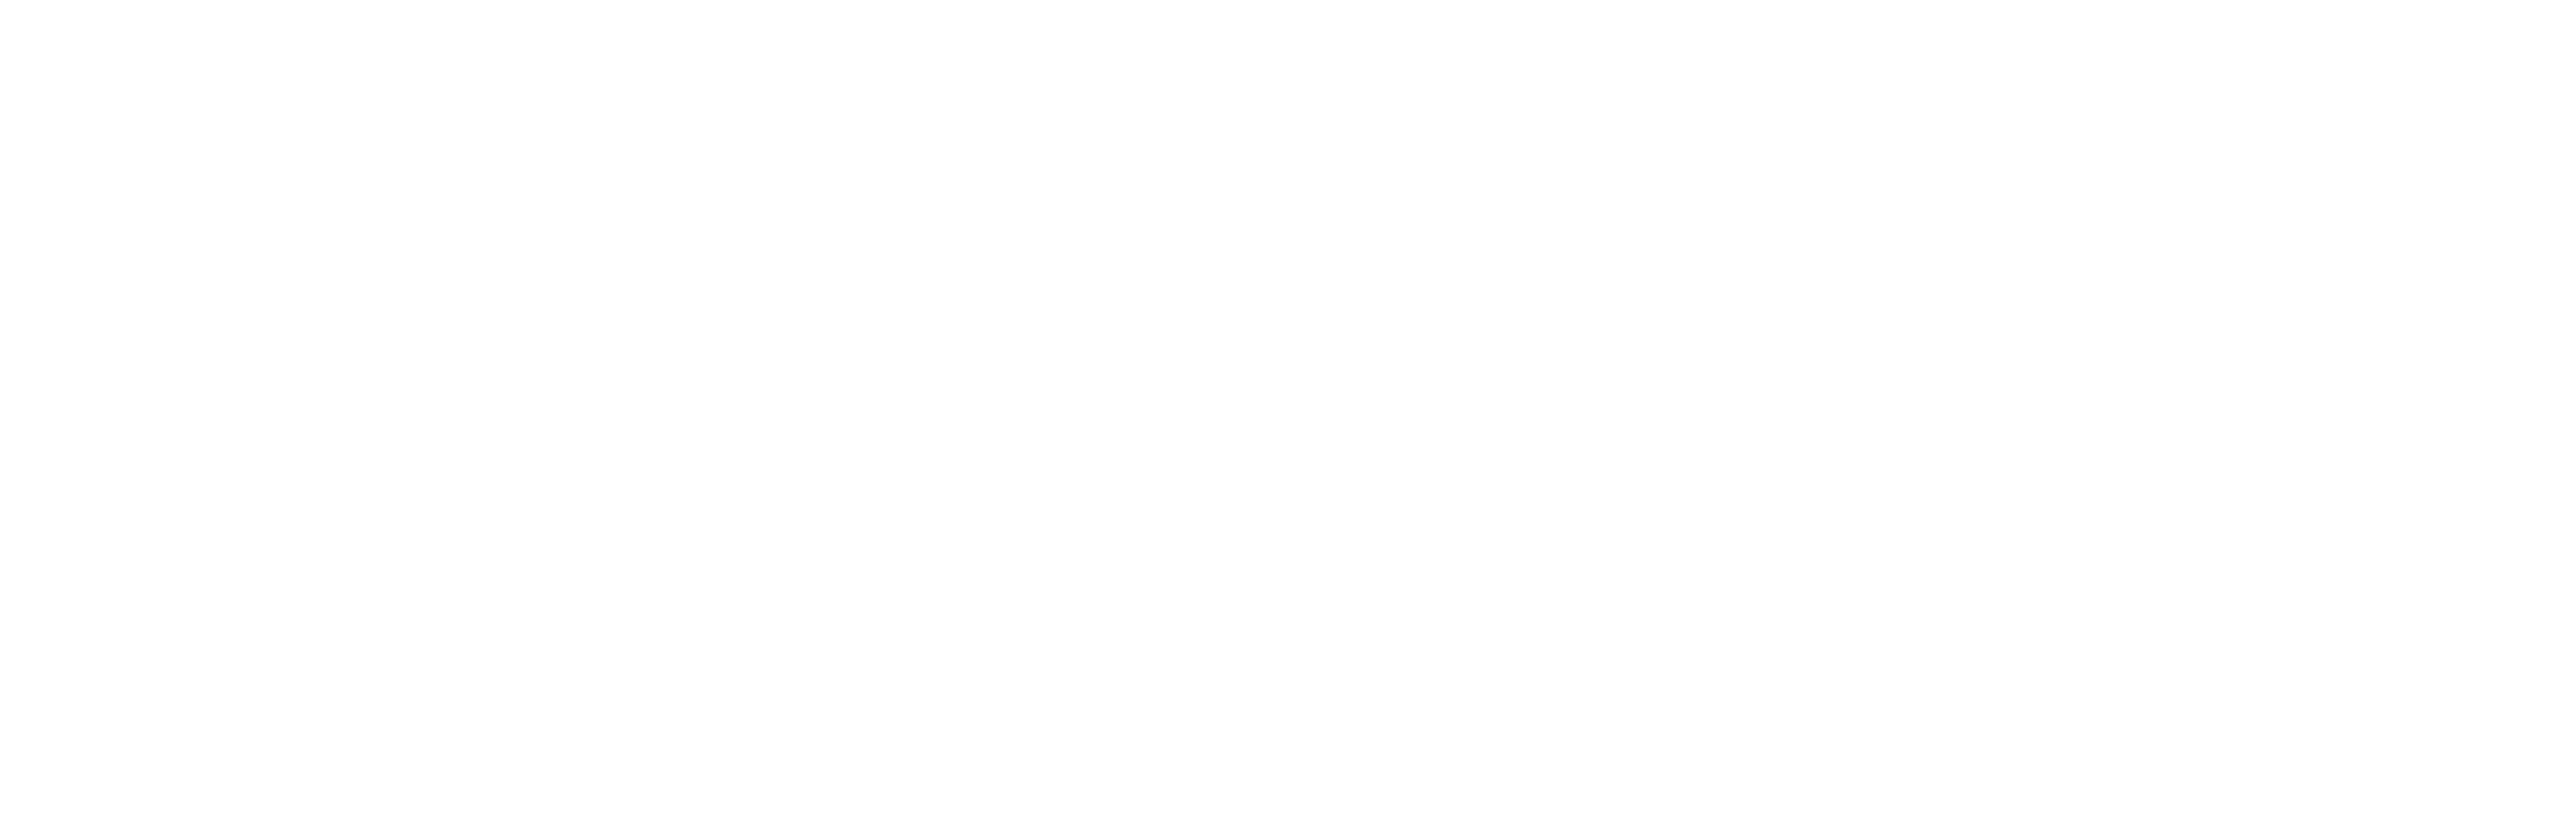 Gopher Team logo